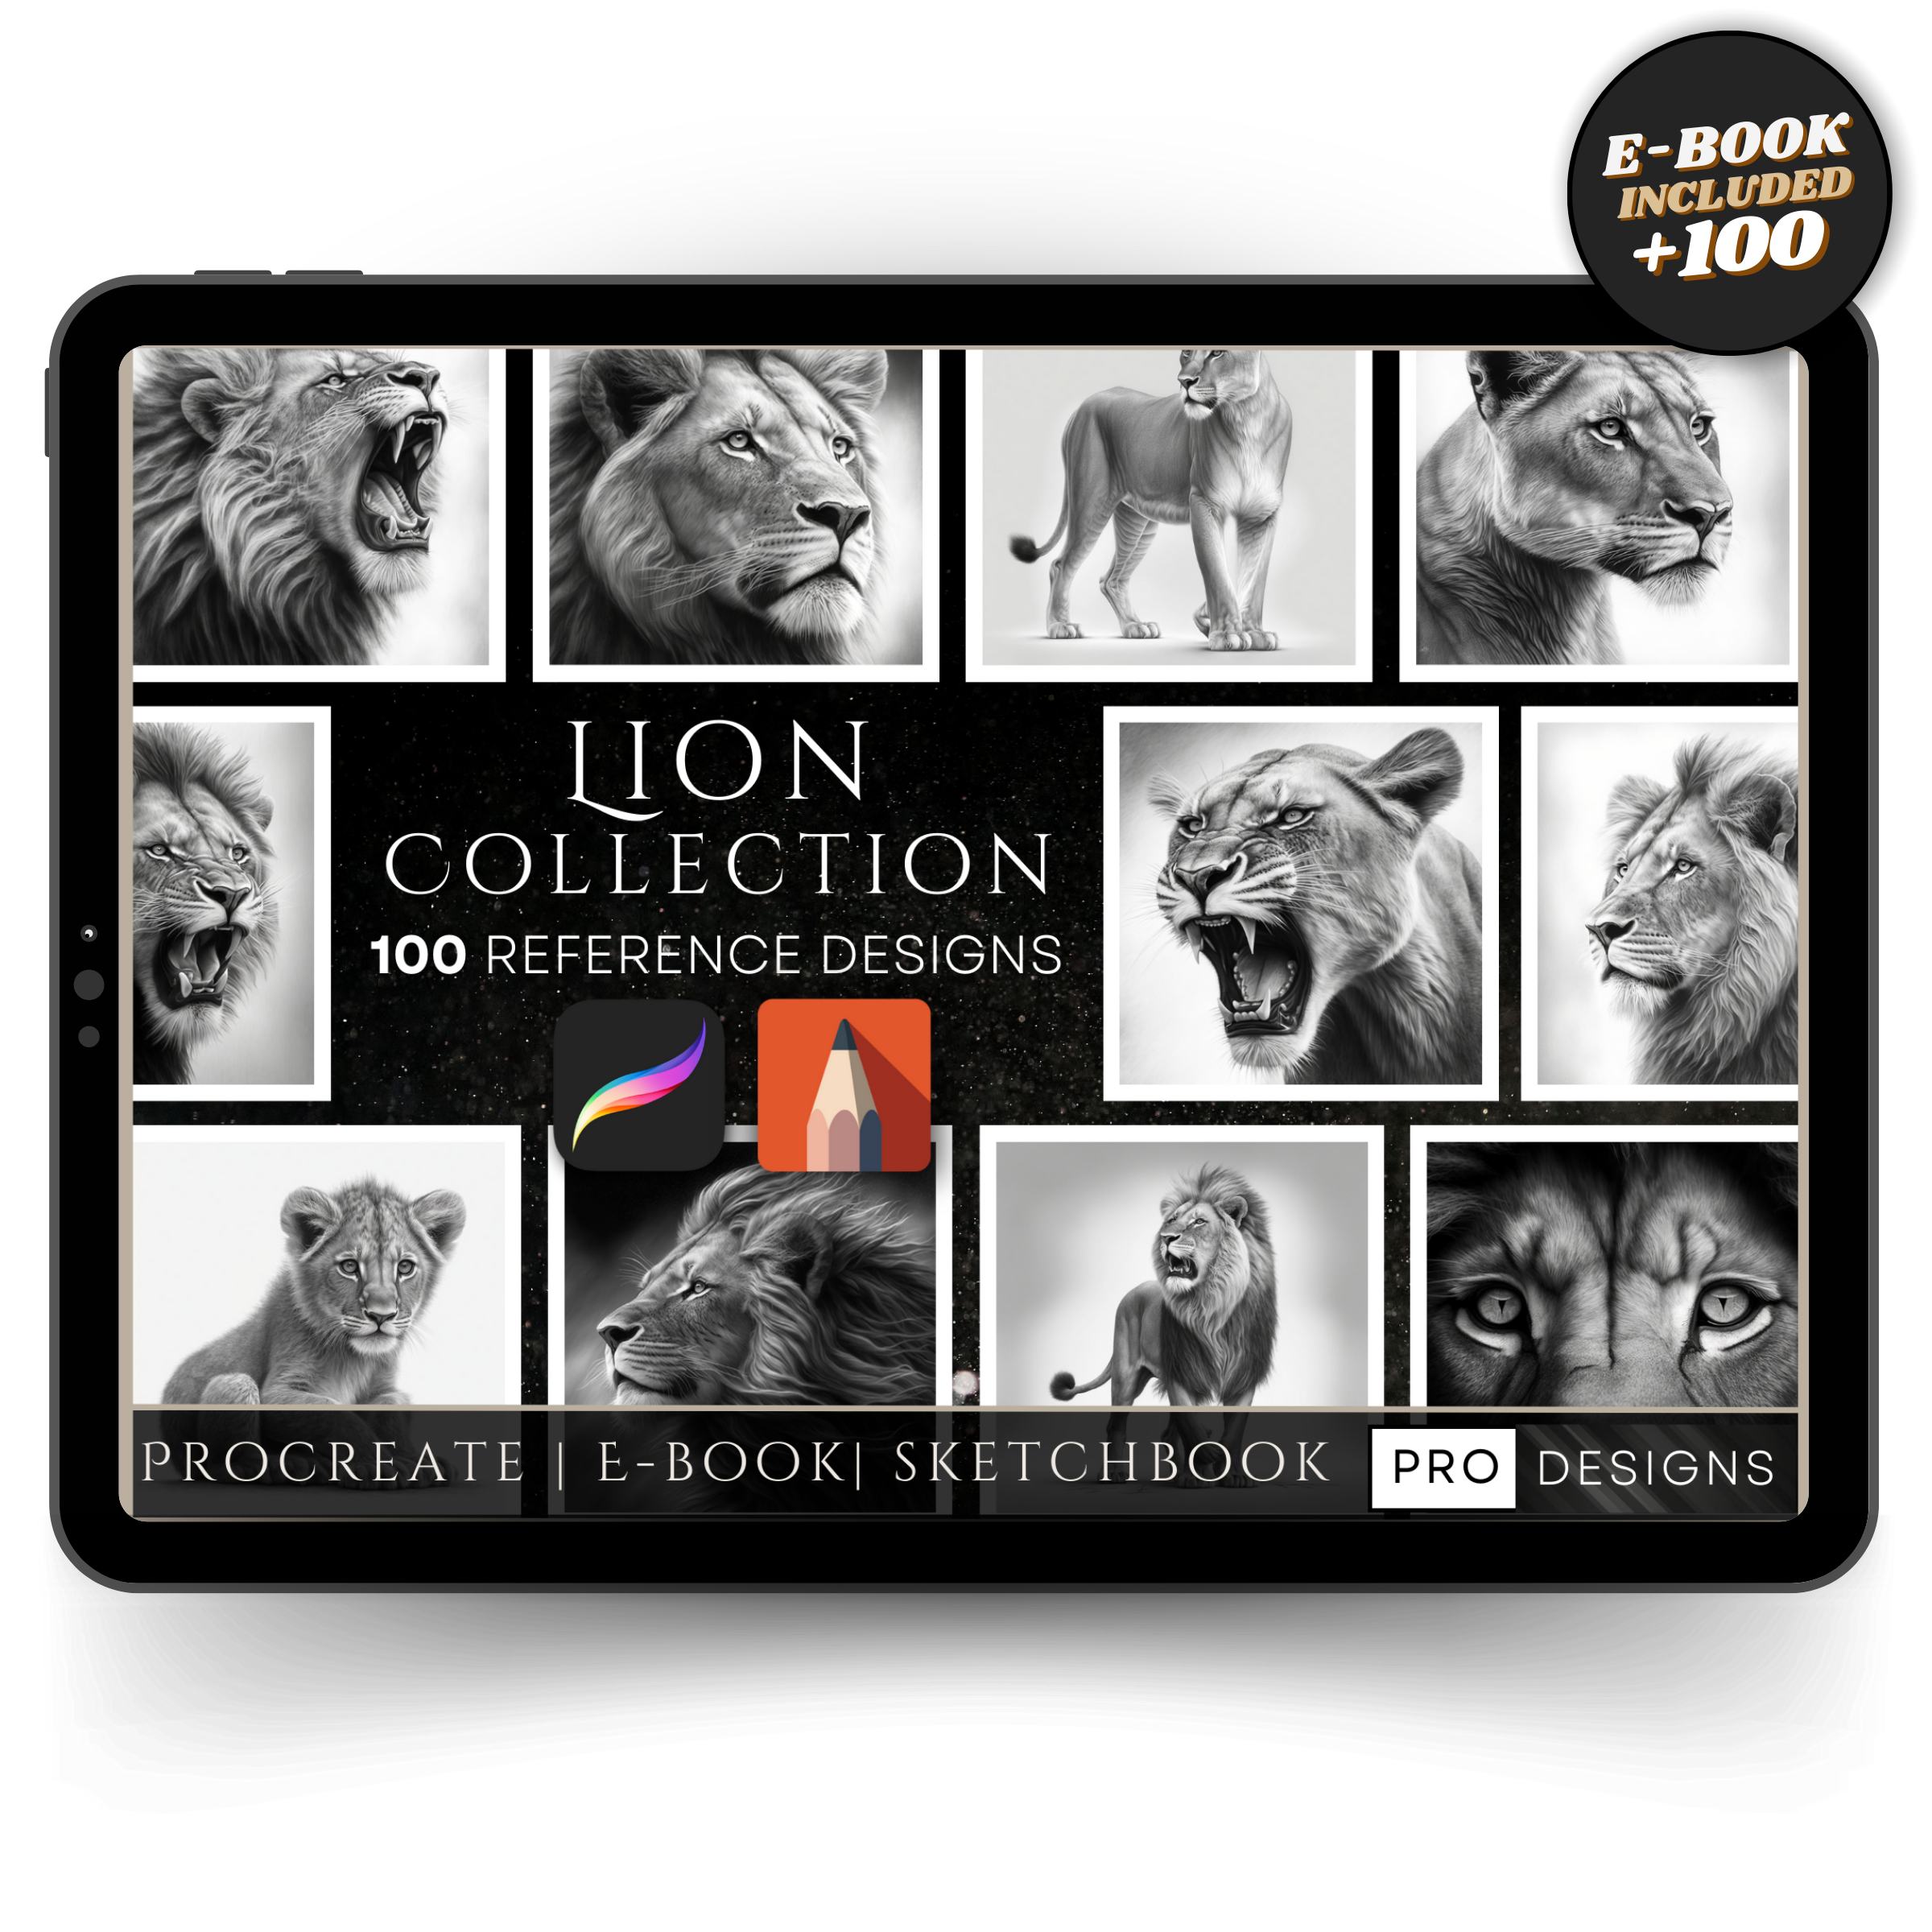 "Regal Roar" - The Majestic Lion Collection